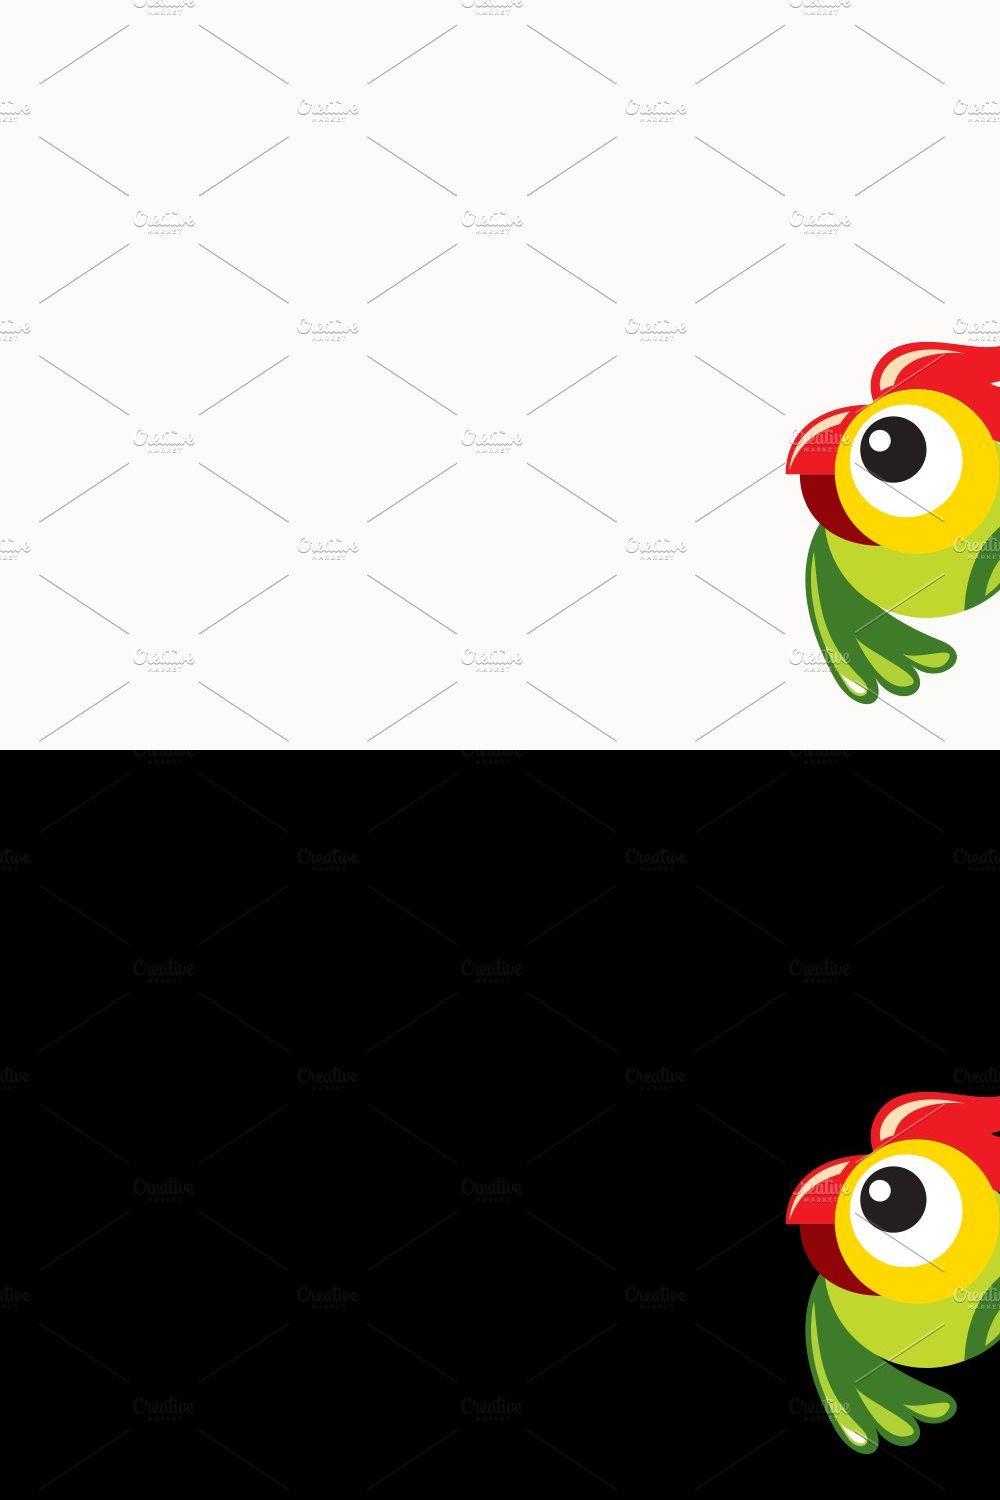 Parrot Logo pinterest preview image.